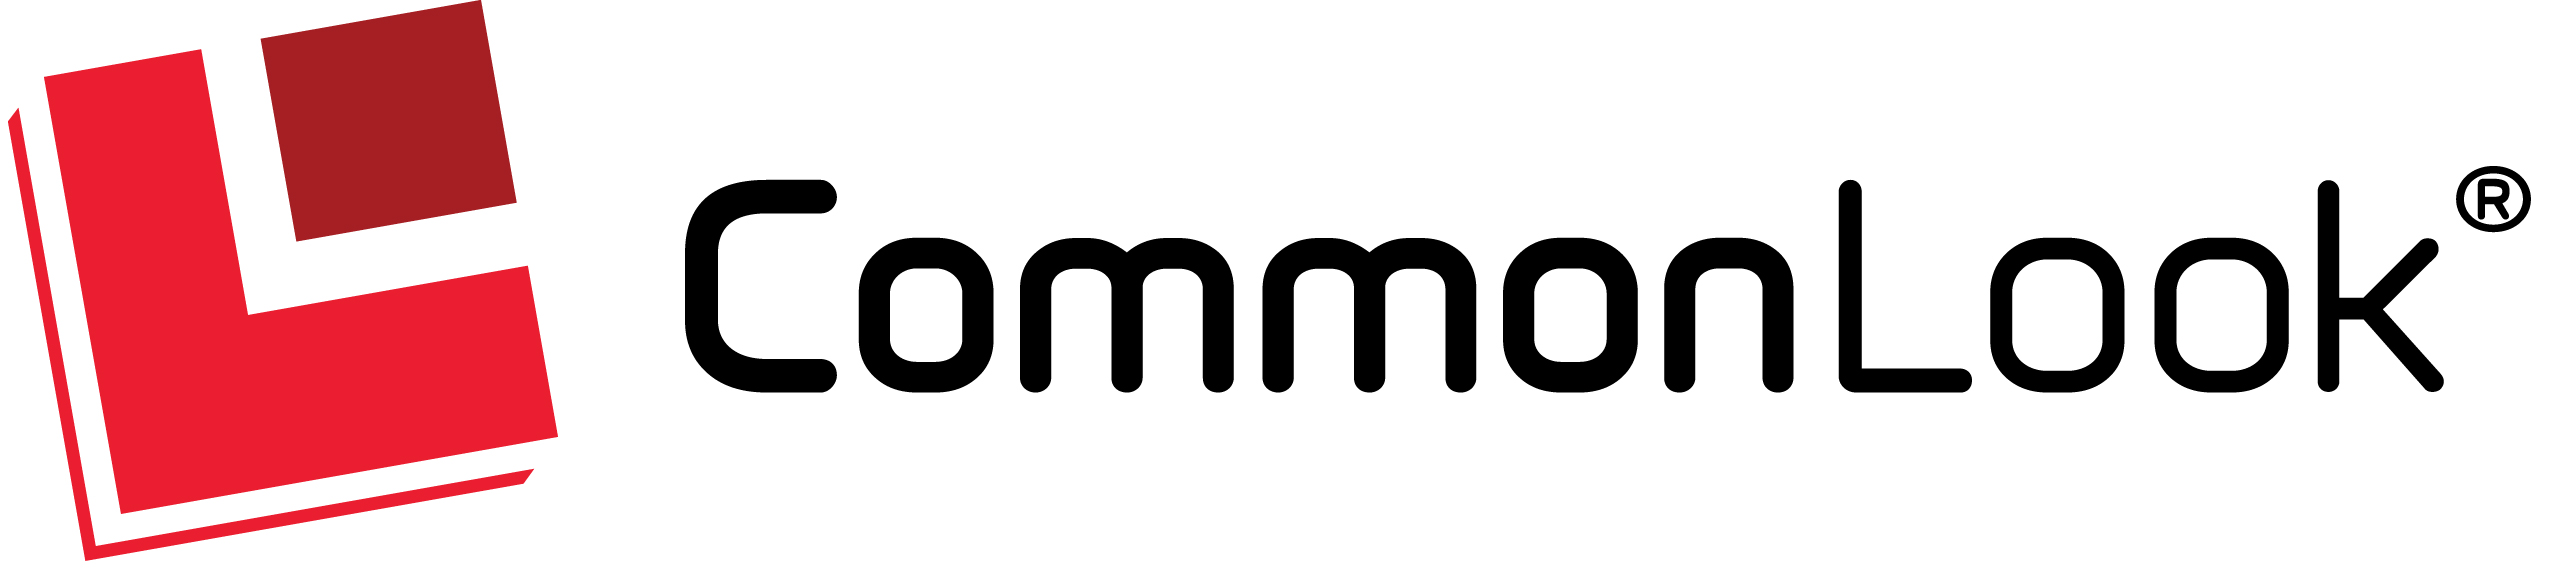 CommonLook Logo